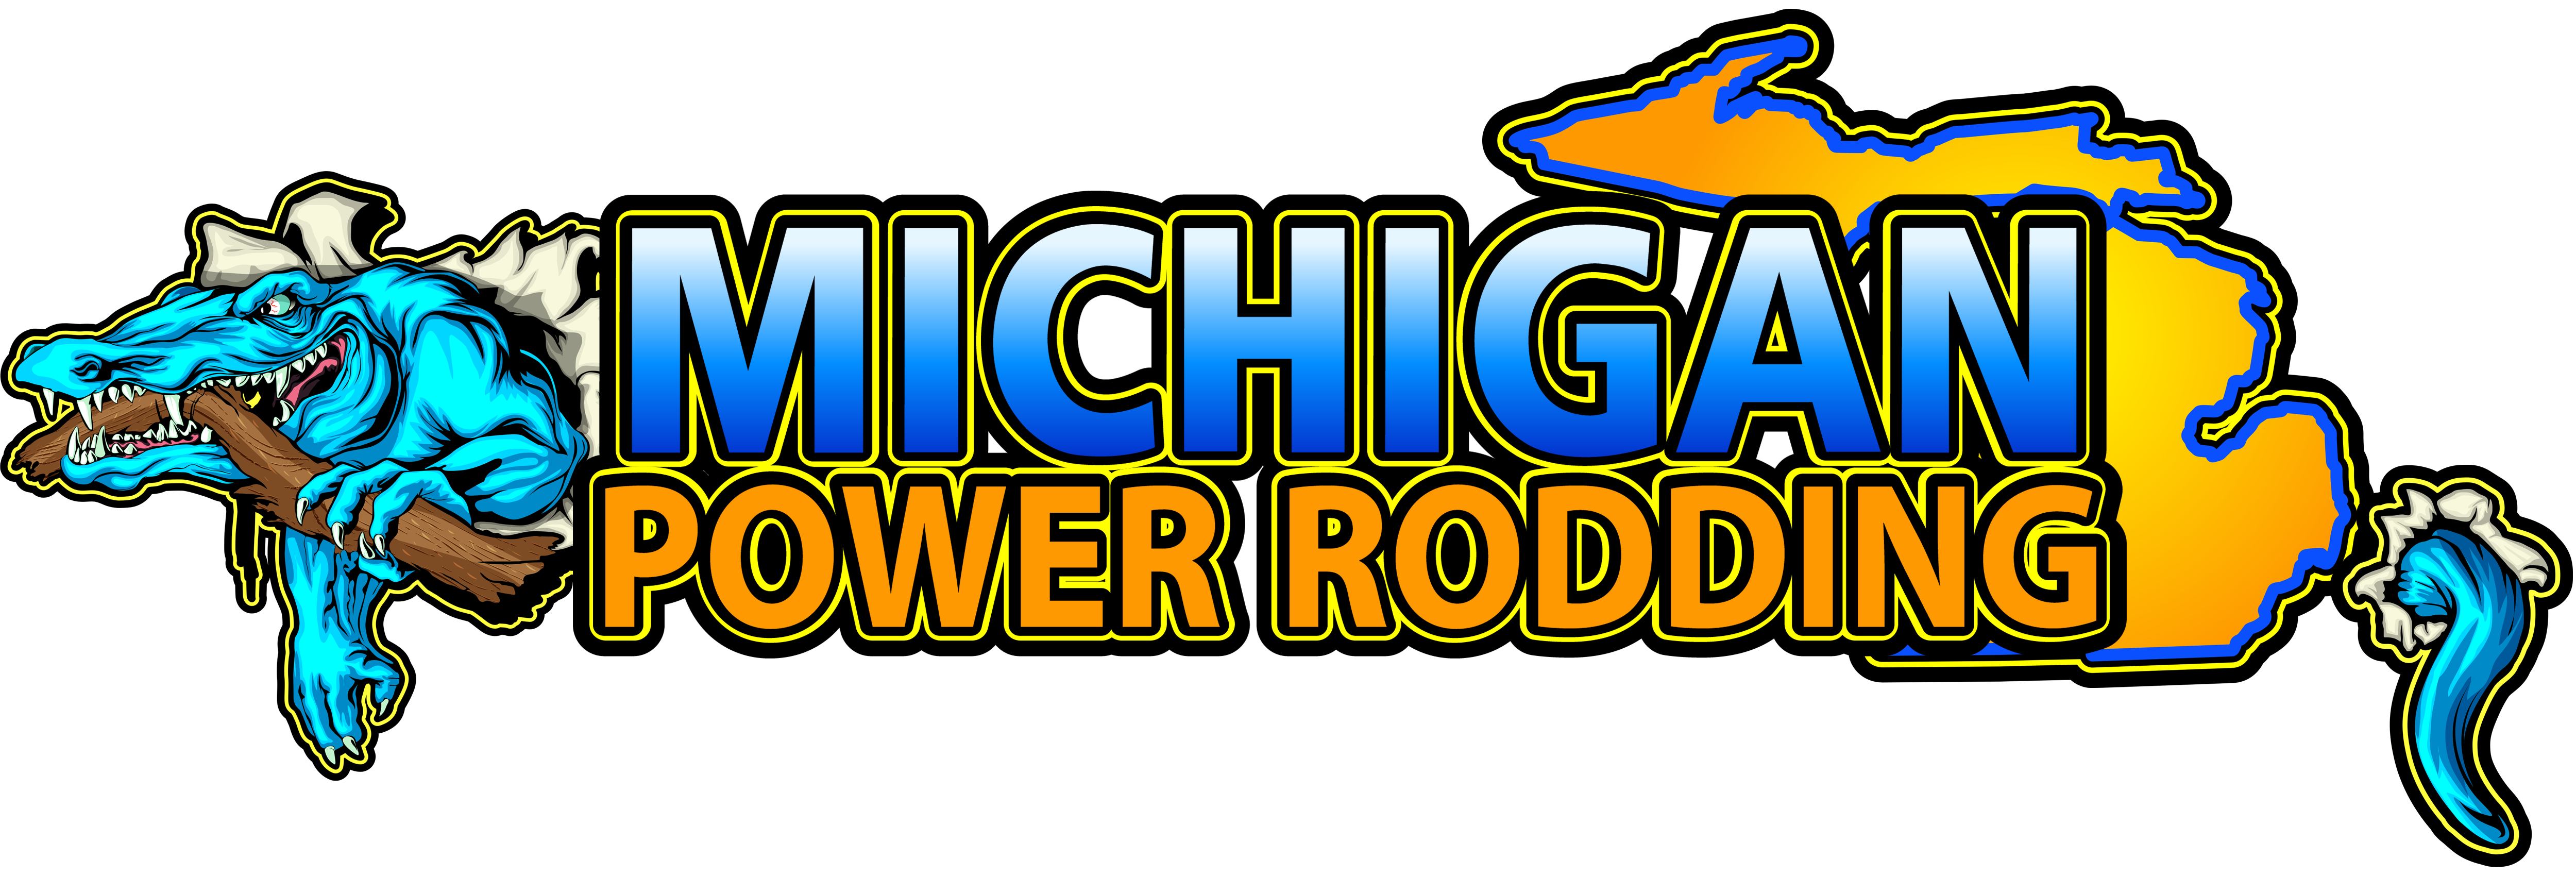 Michigan Power Rodding Logo - Charlotte NC